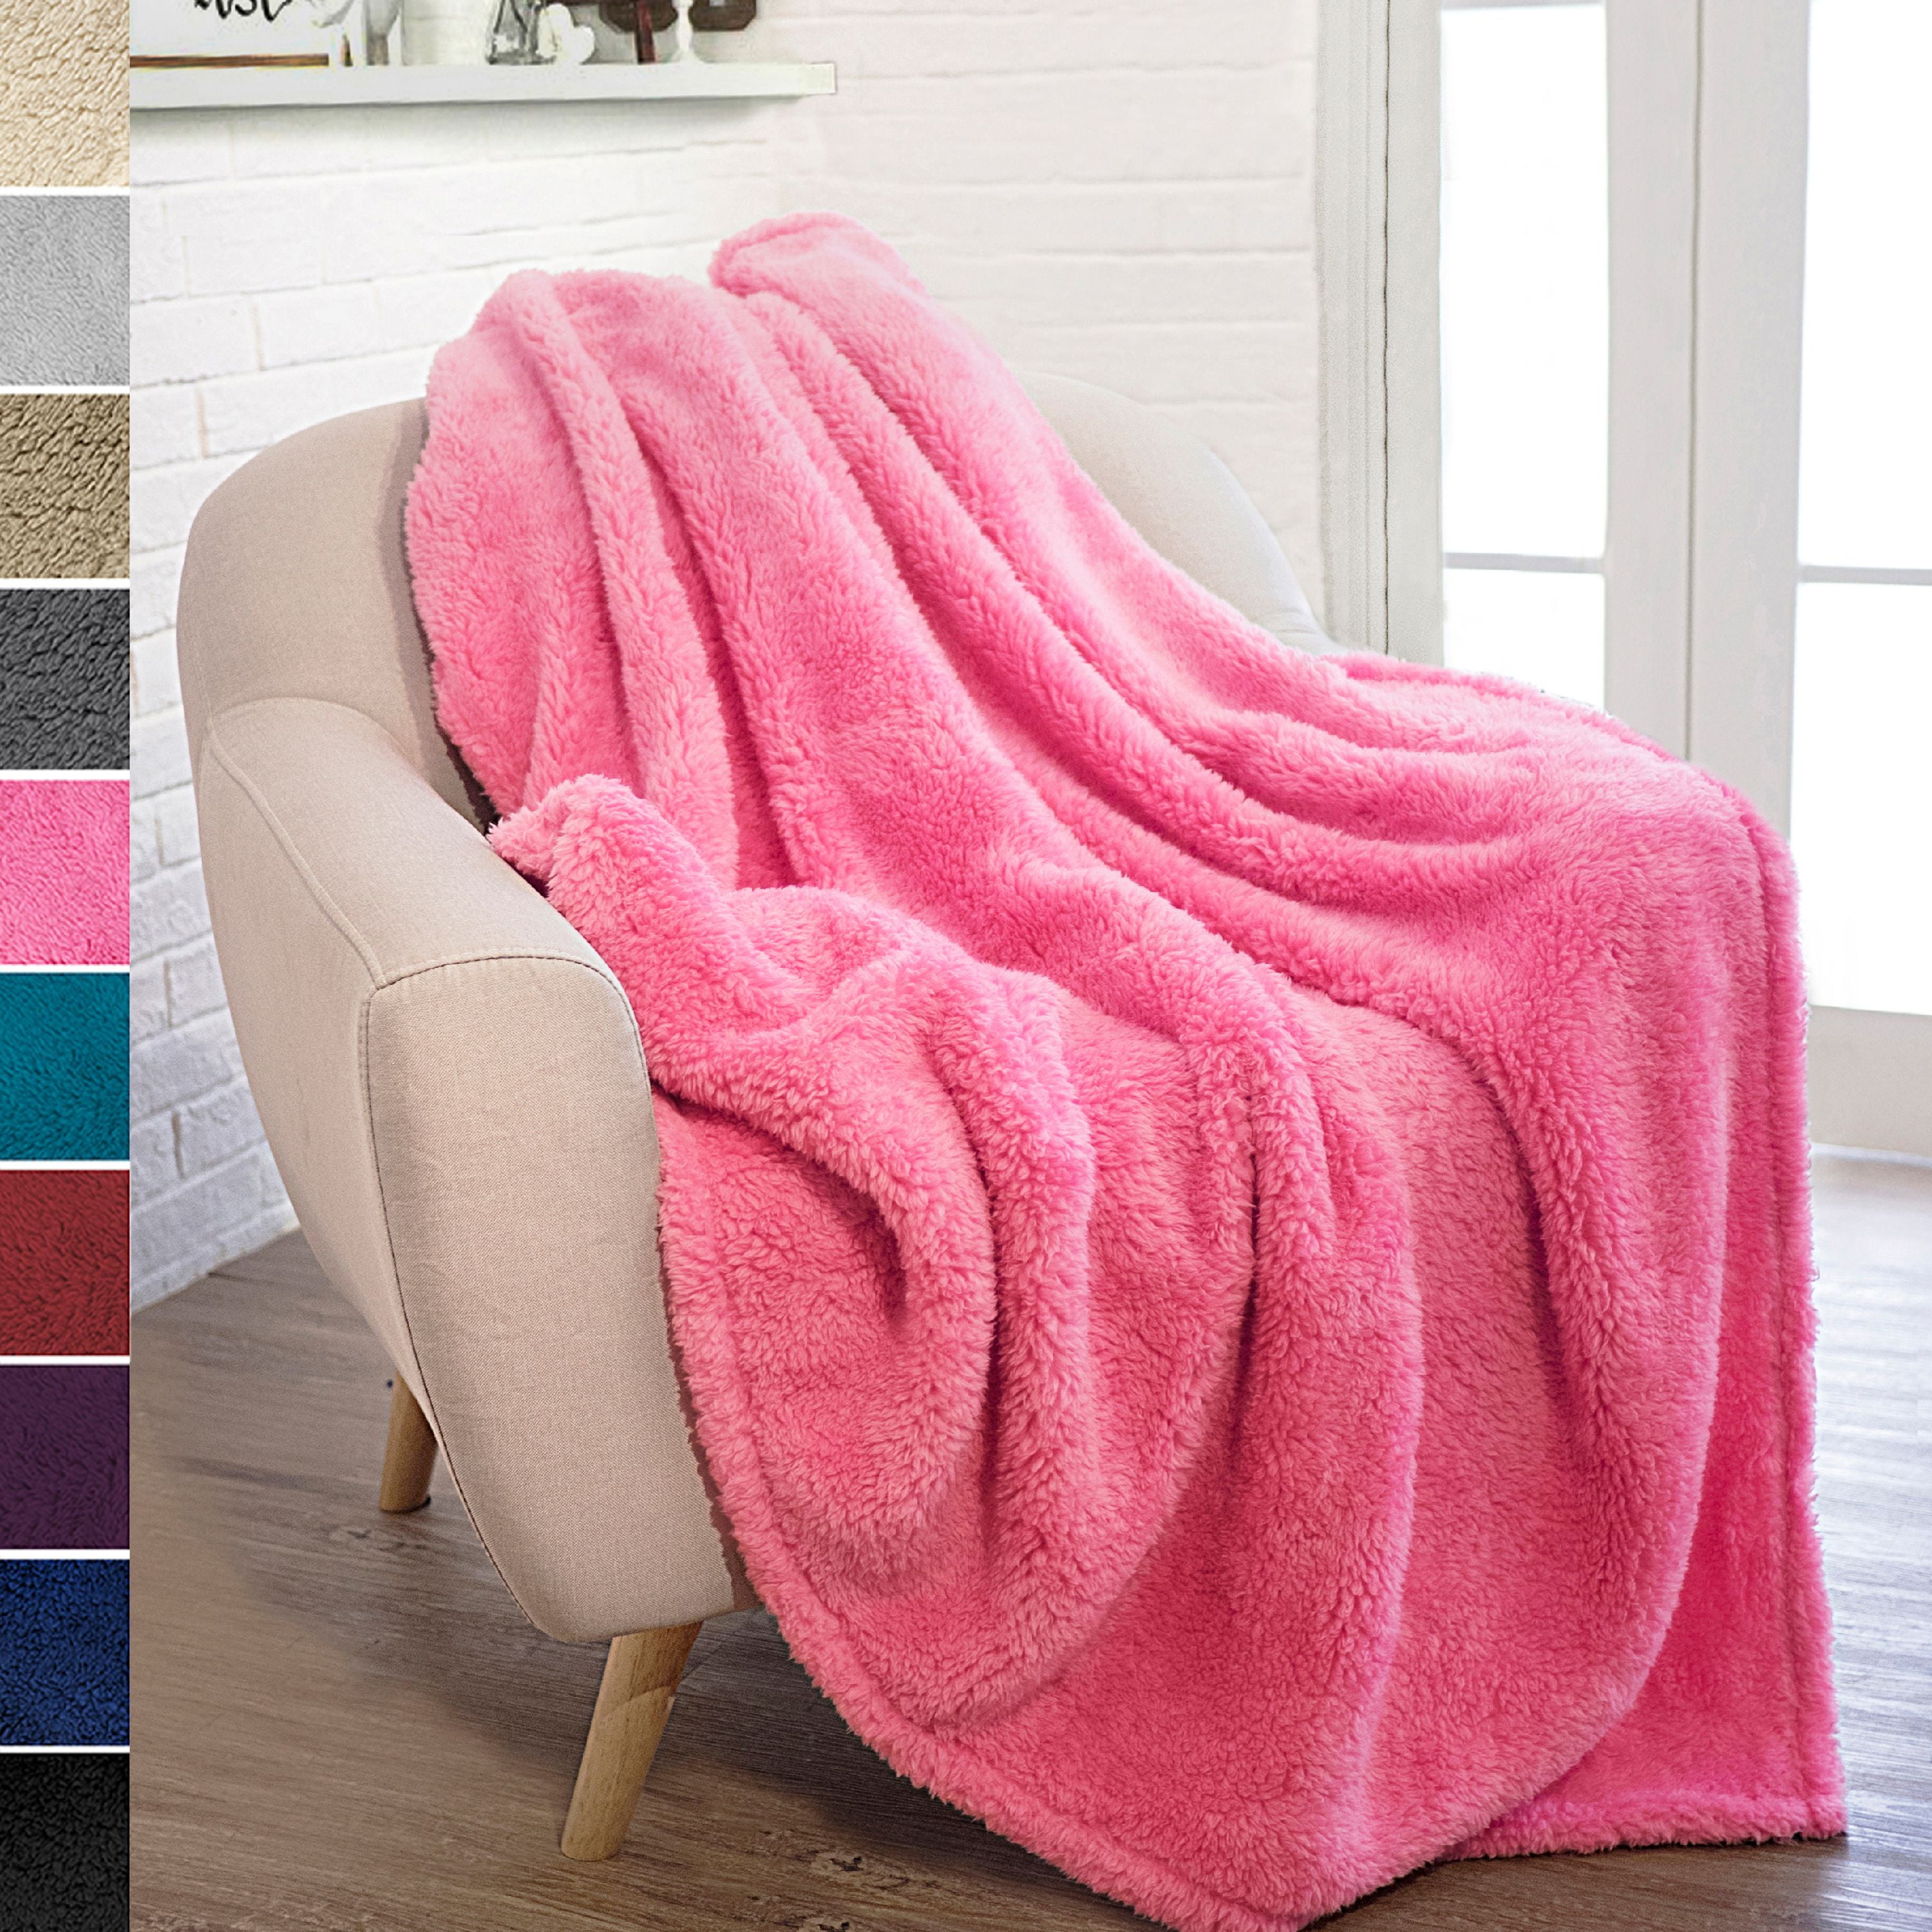 Plush Throw Blankets Throw Blanket for Couch Blush Pink & White Sherpa Blanket Soft Blanket 60.5 x 48 Fleece Blanket White Throw Blanket Sherpa Throw Blankets Fluffy Blanket